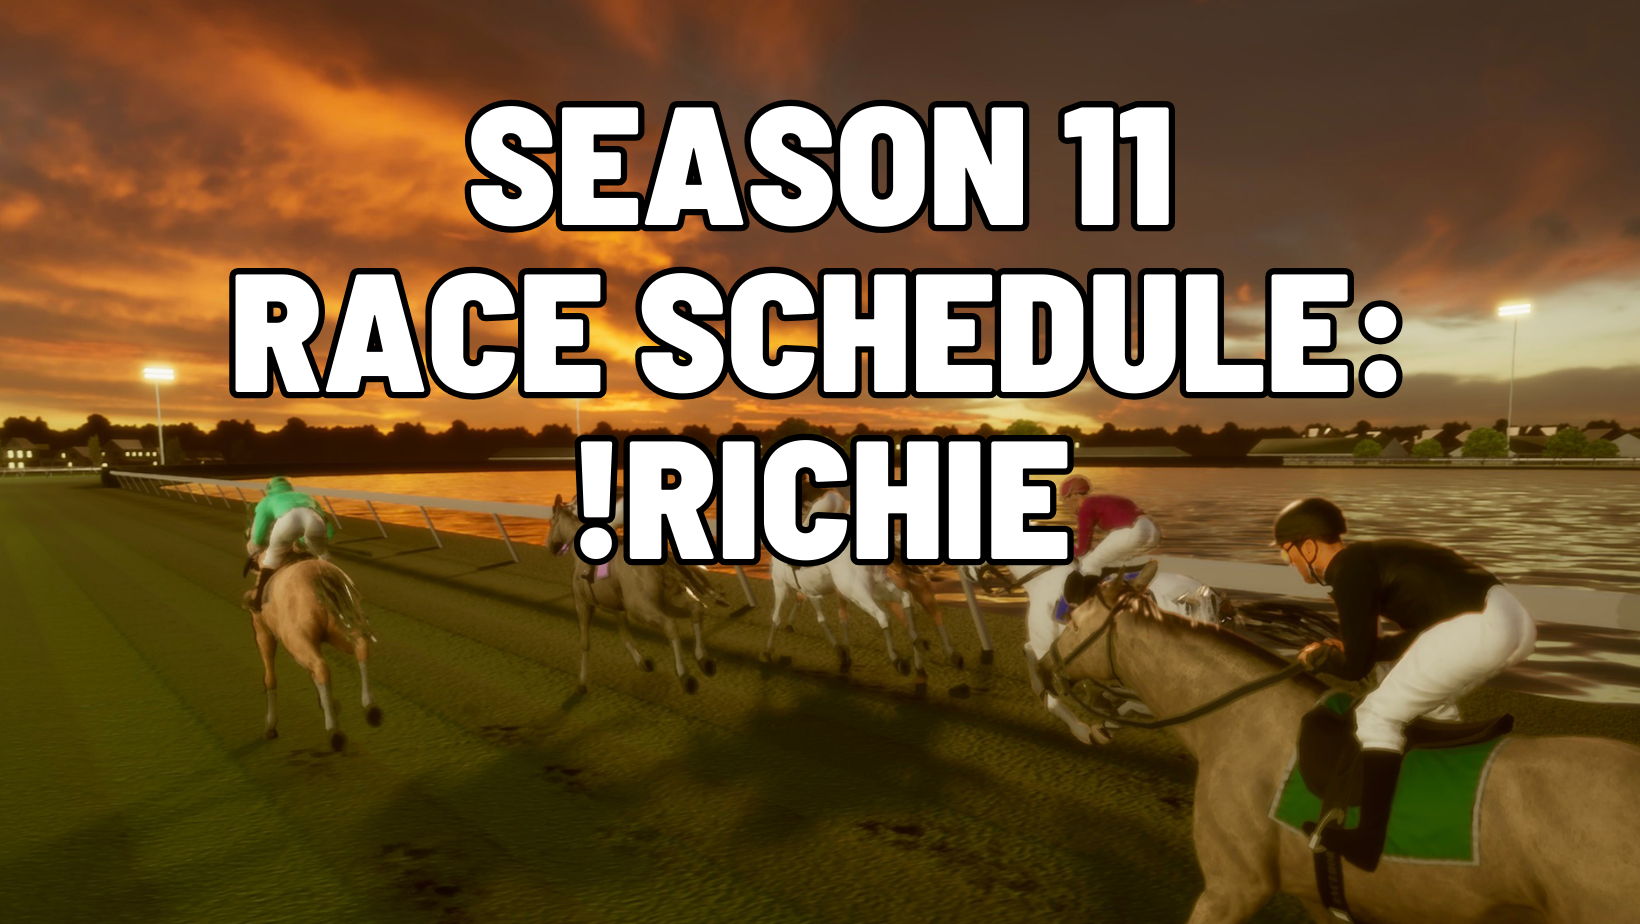 Season 11 Race Schedule: !Richie